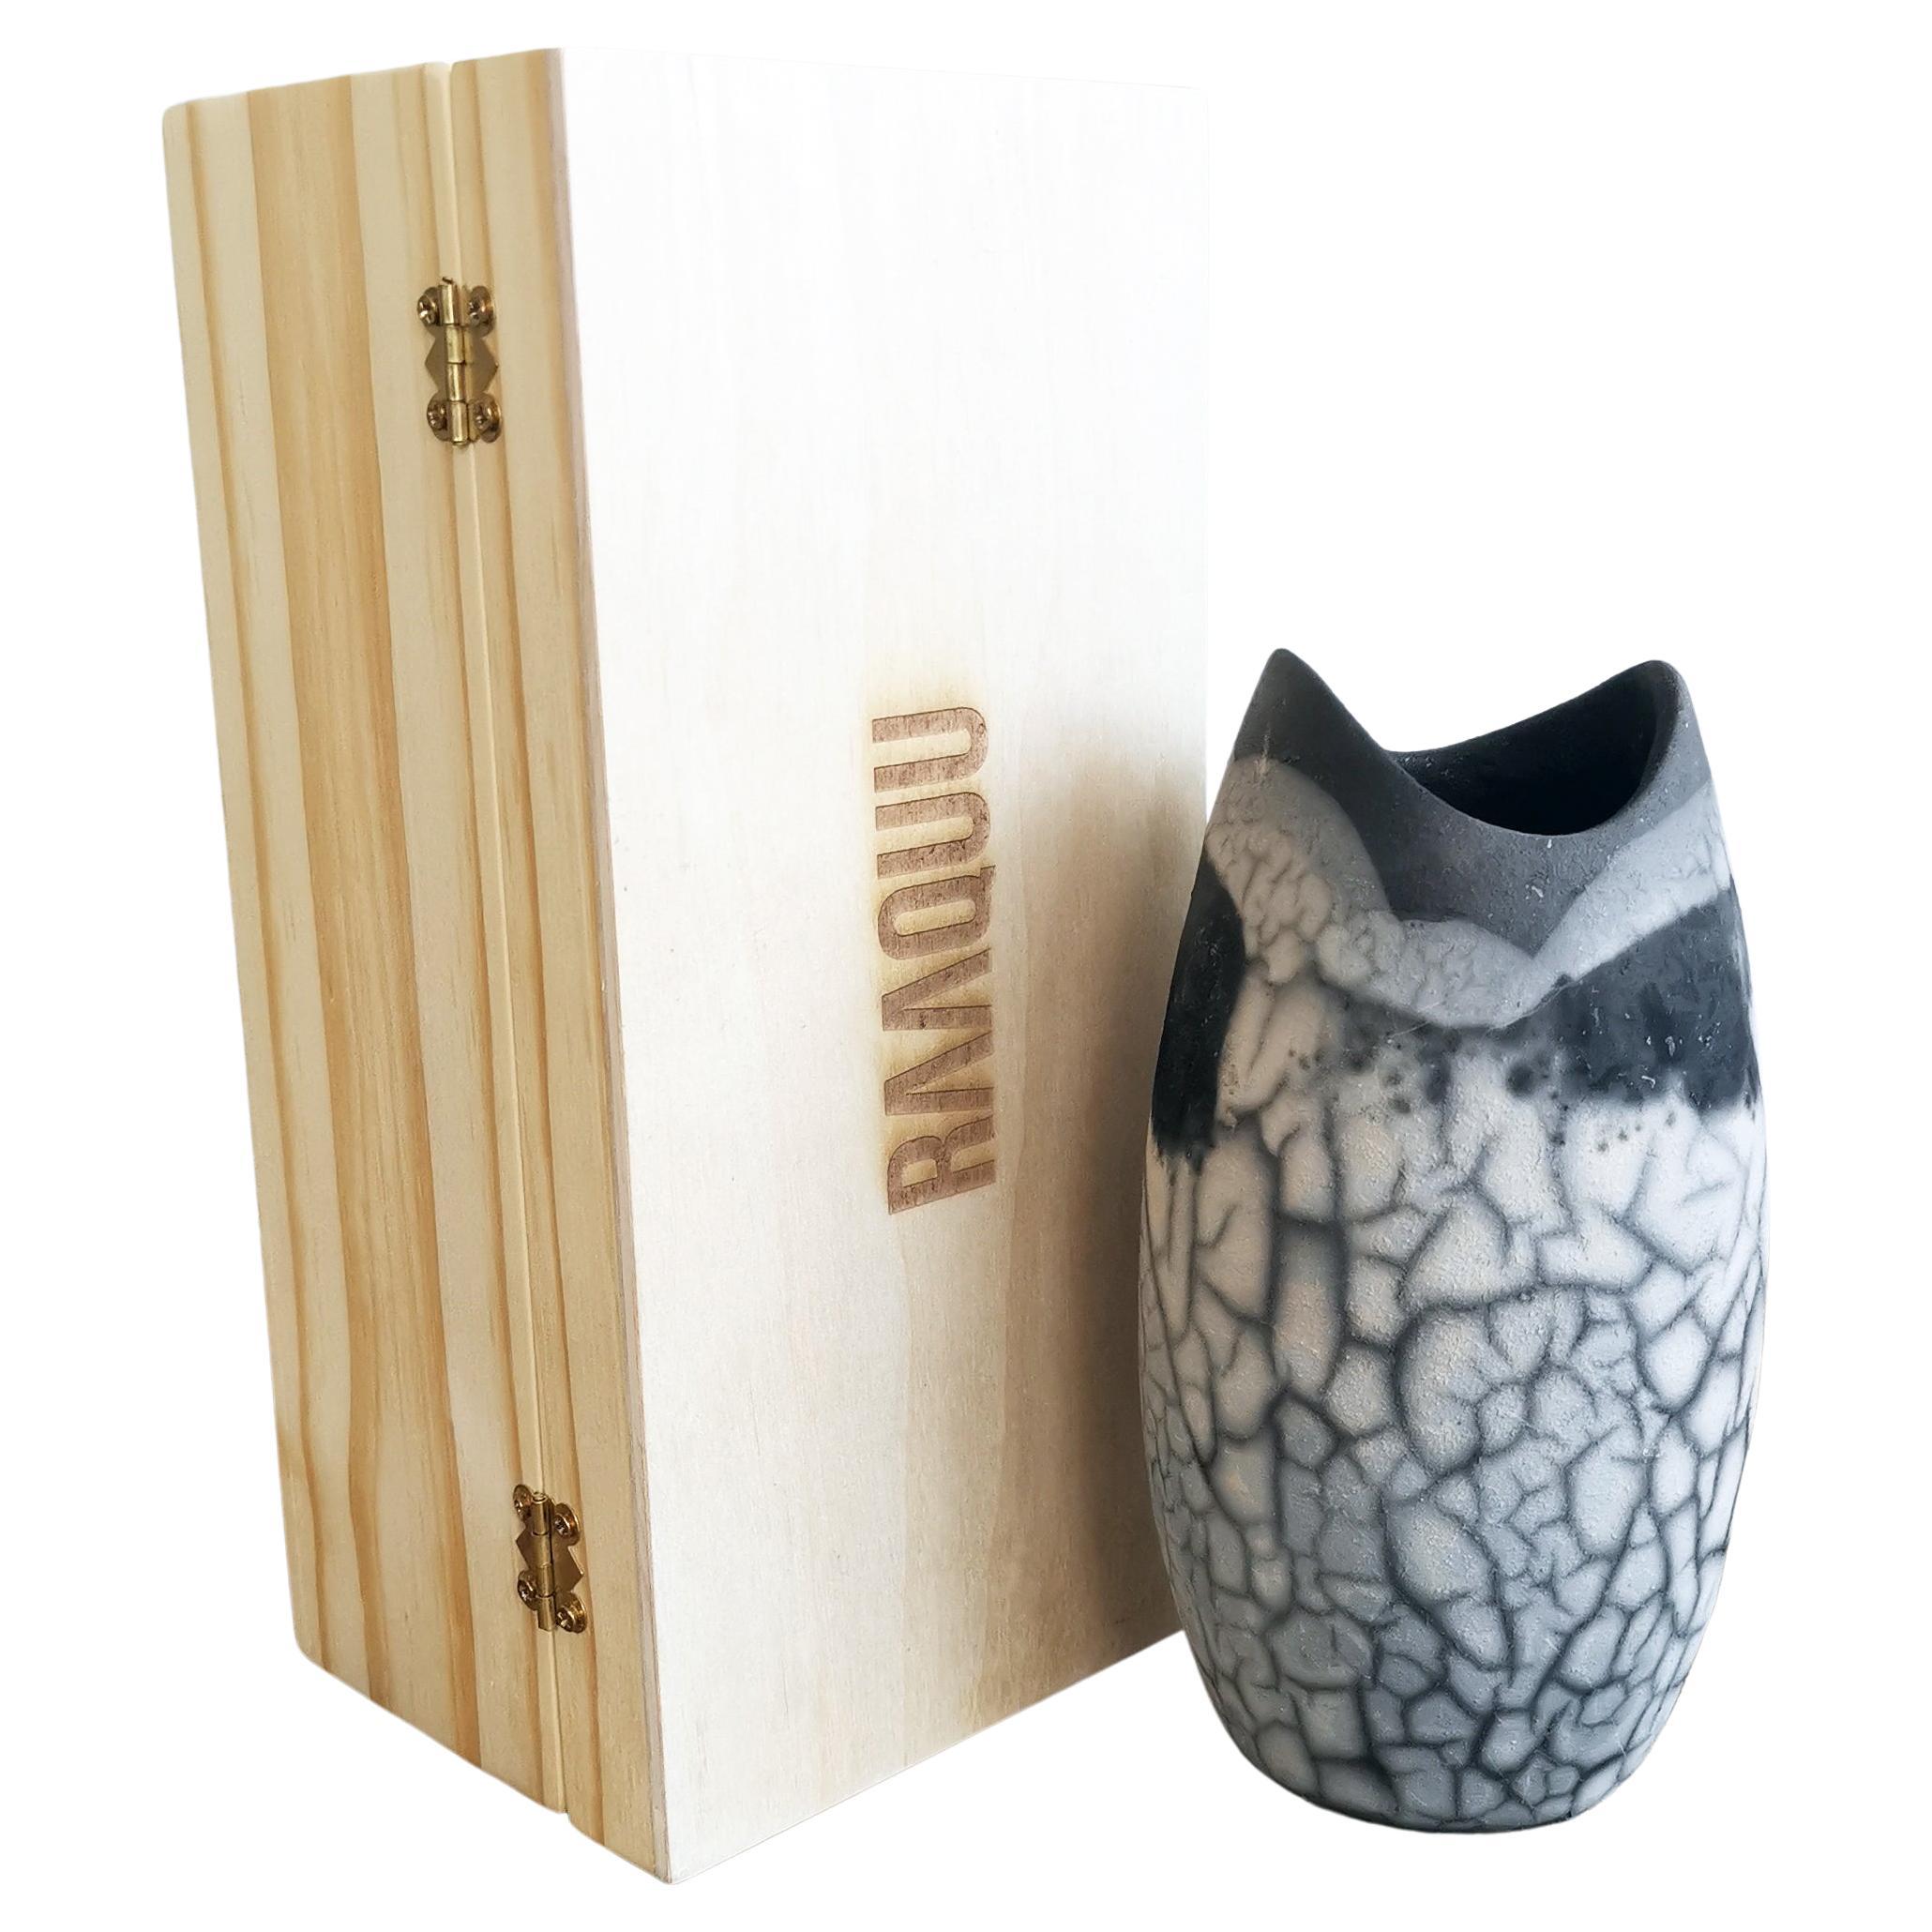 Koi Raku Pottery Vase with Gift Box - Smoked Raku - Handmade Ceramic For Sale